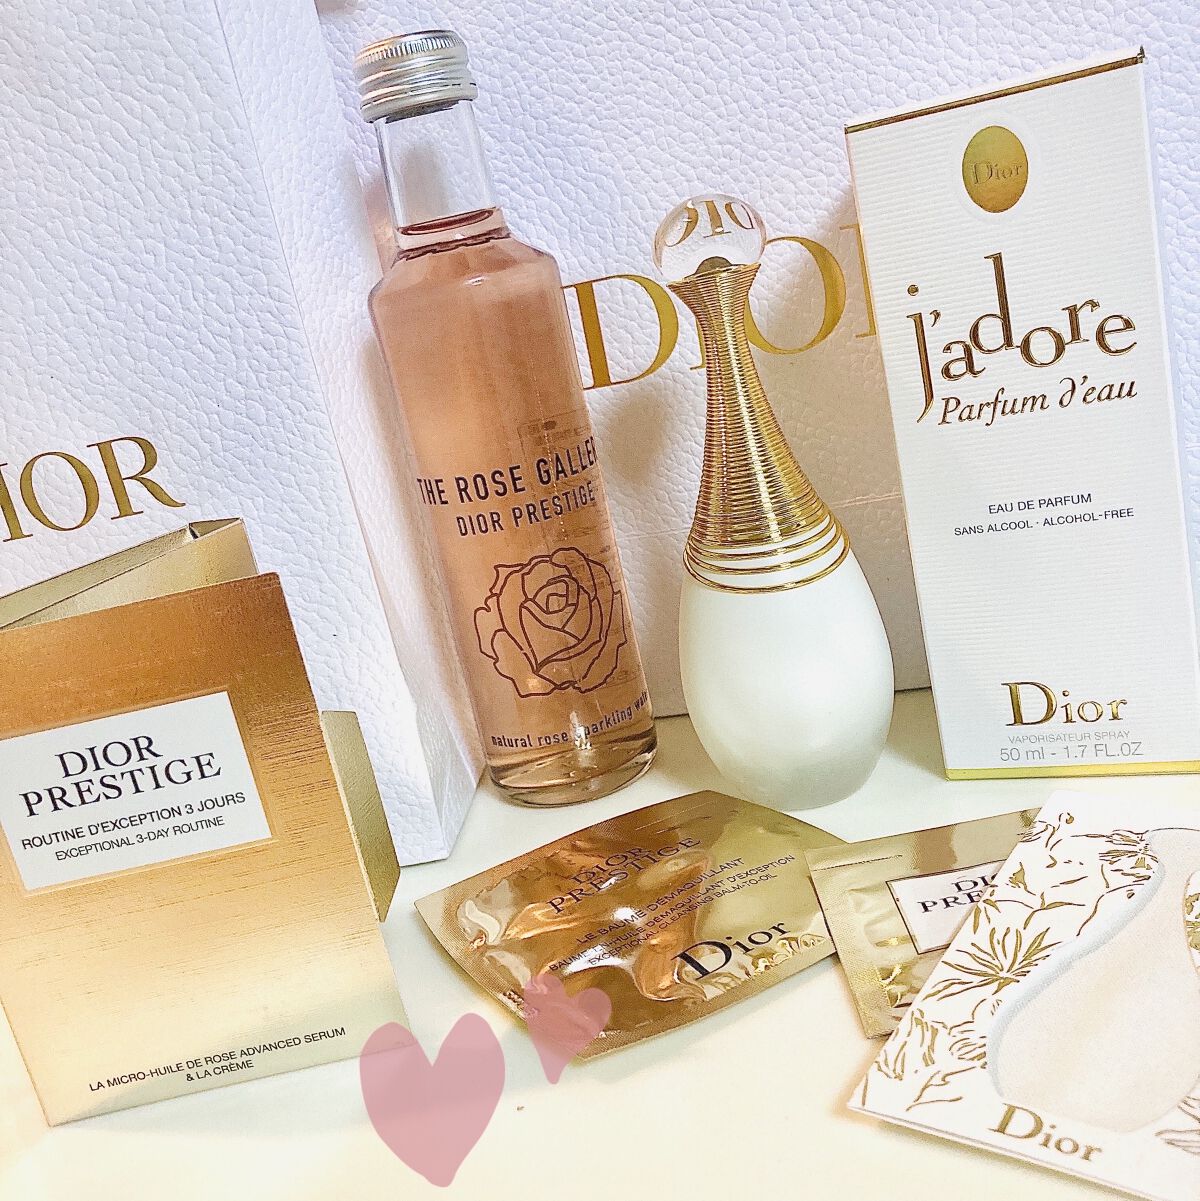 Dior ディオール ジャドール パルファン ドー 香水 サンプル 試供品